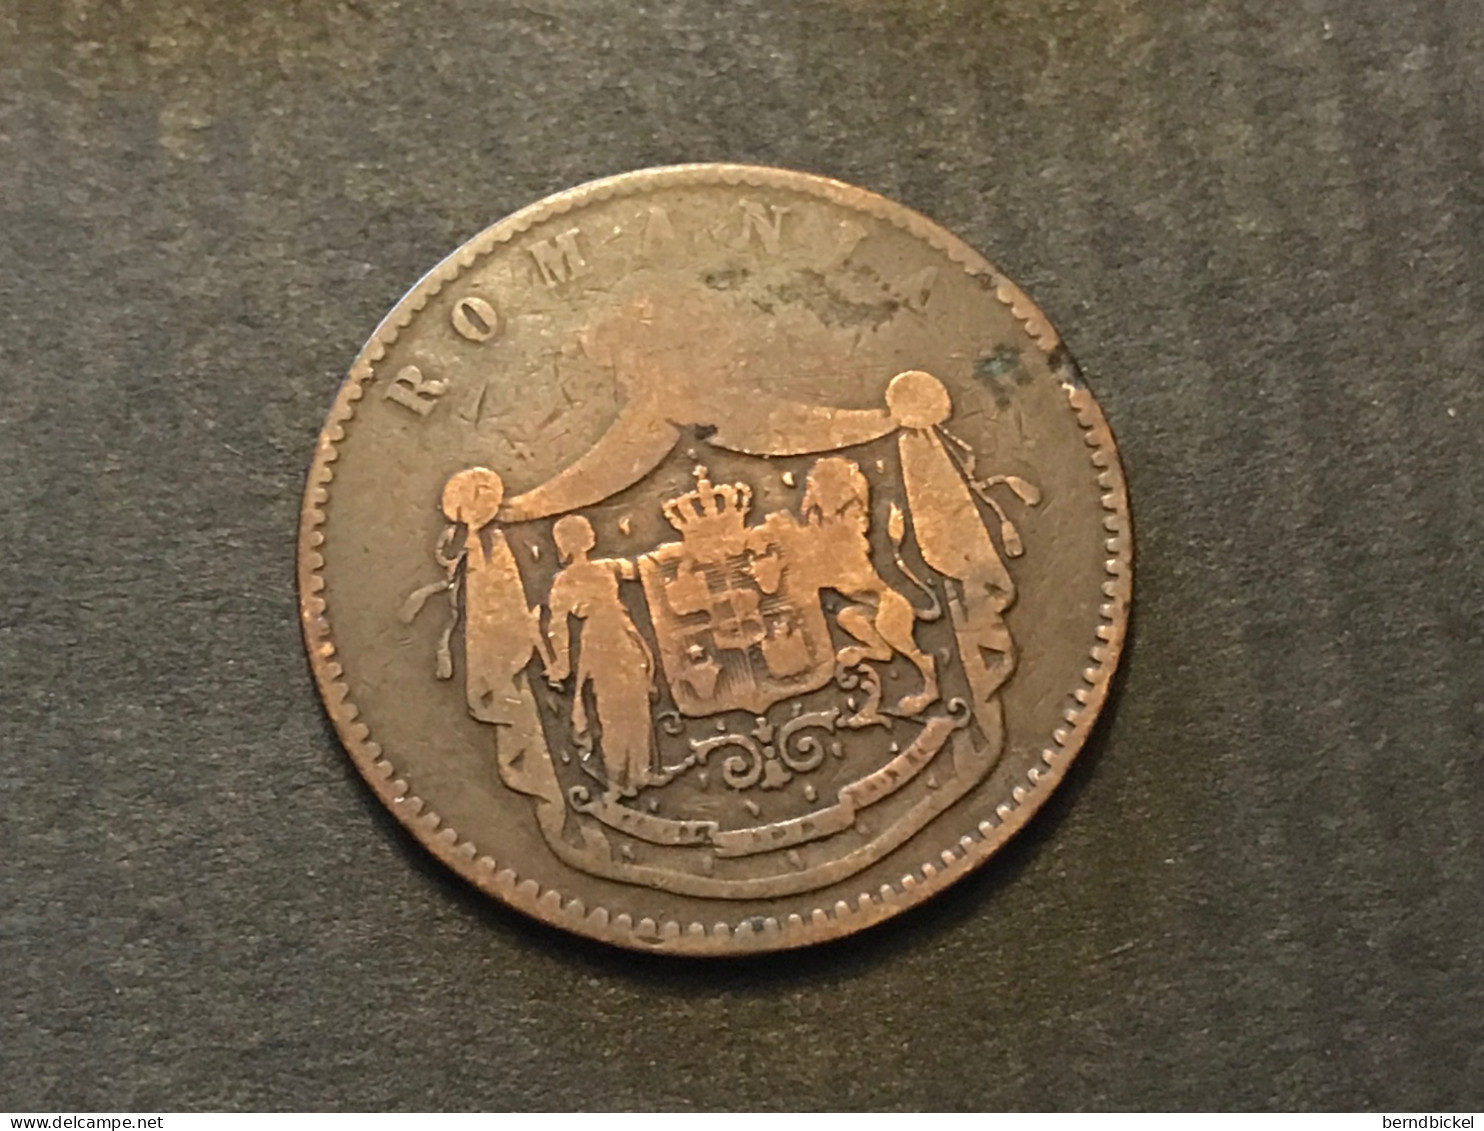 Münze Münzen Umlaufmünze Rumänien 10 Bani 1867 "Watt" - Rumänien